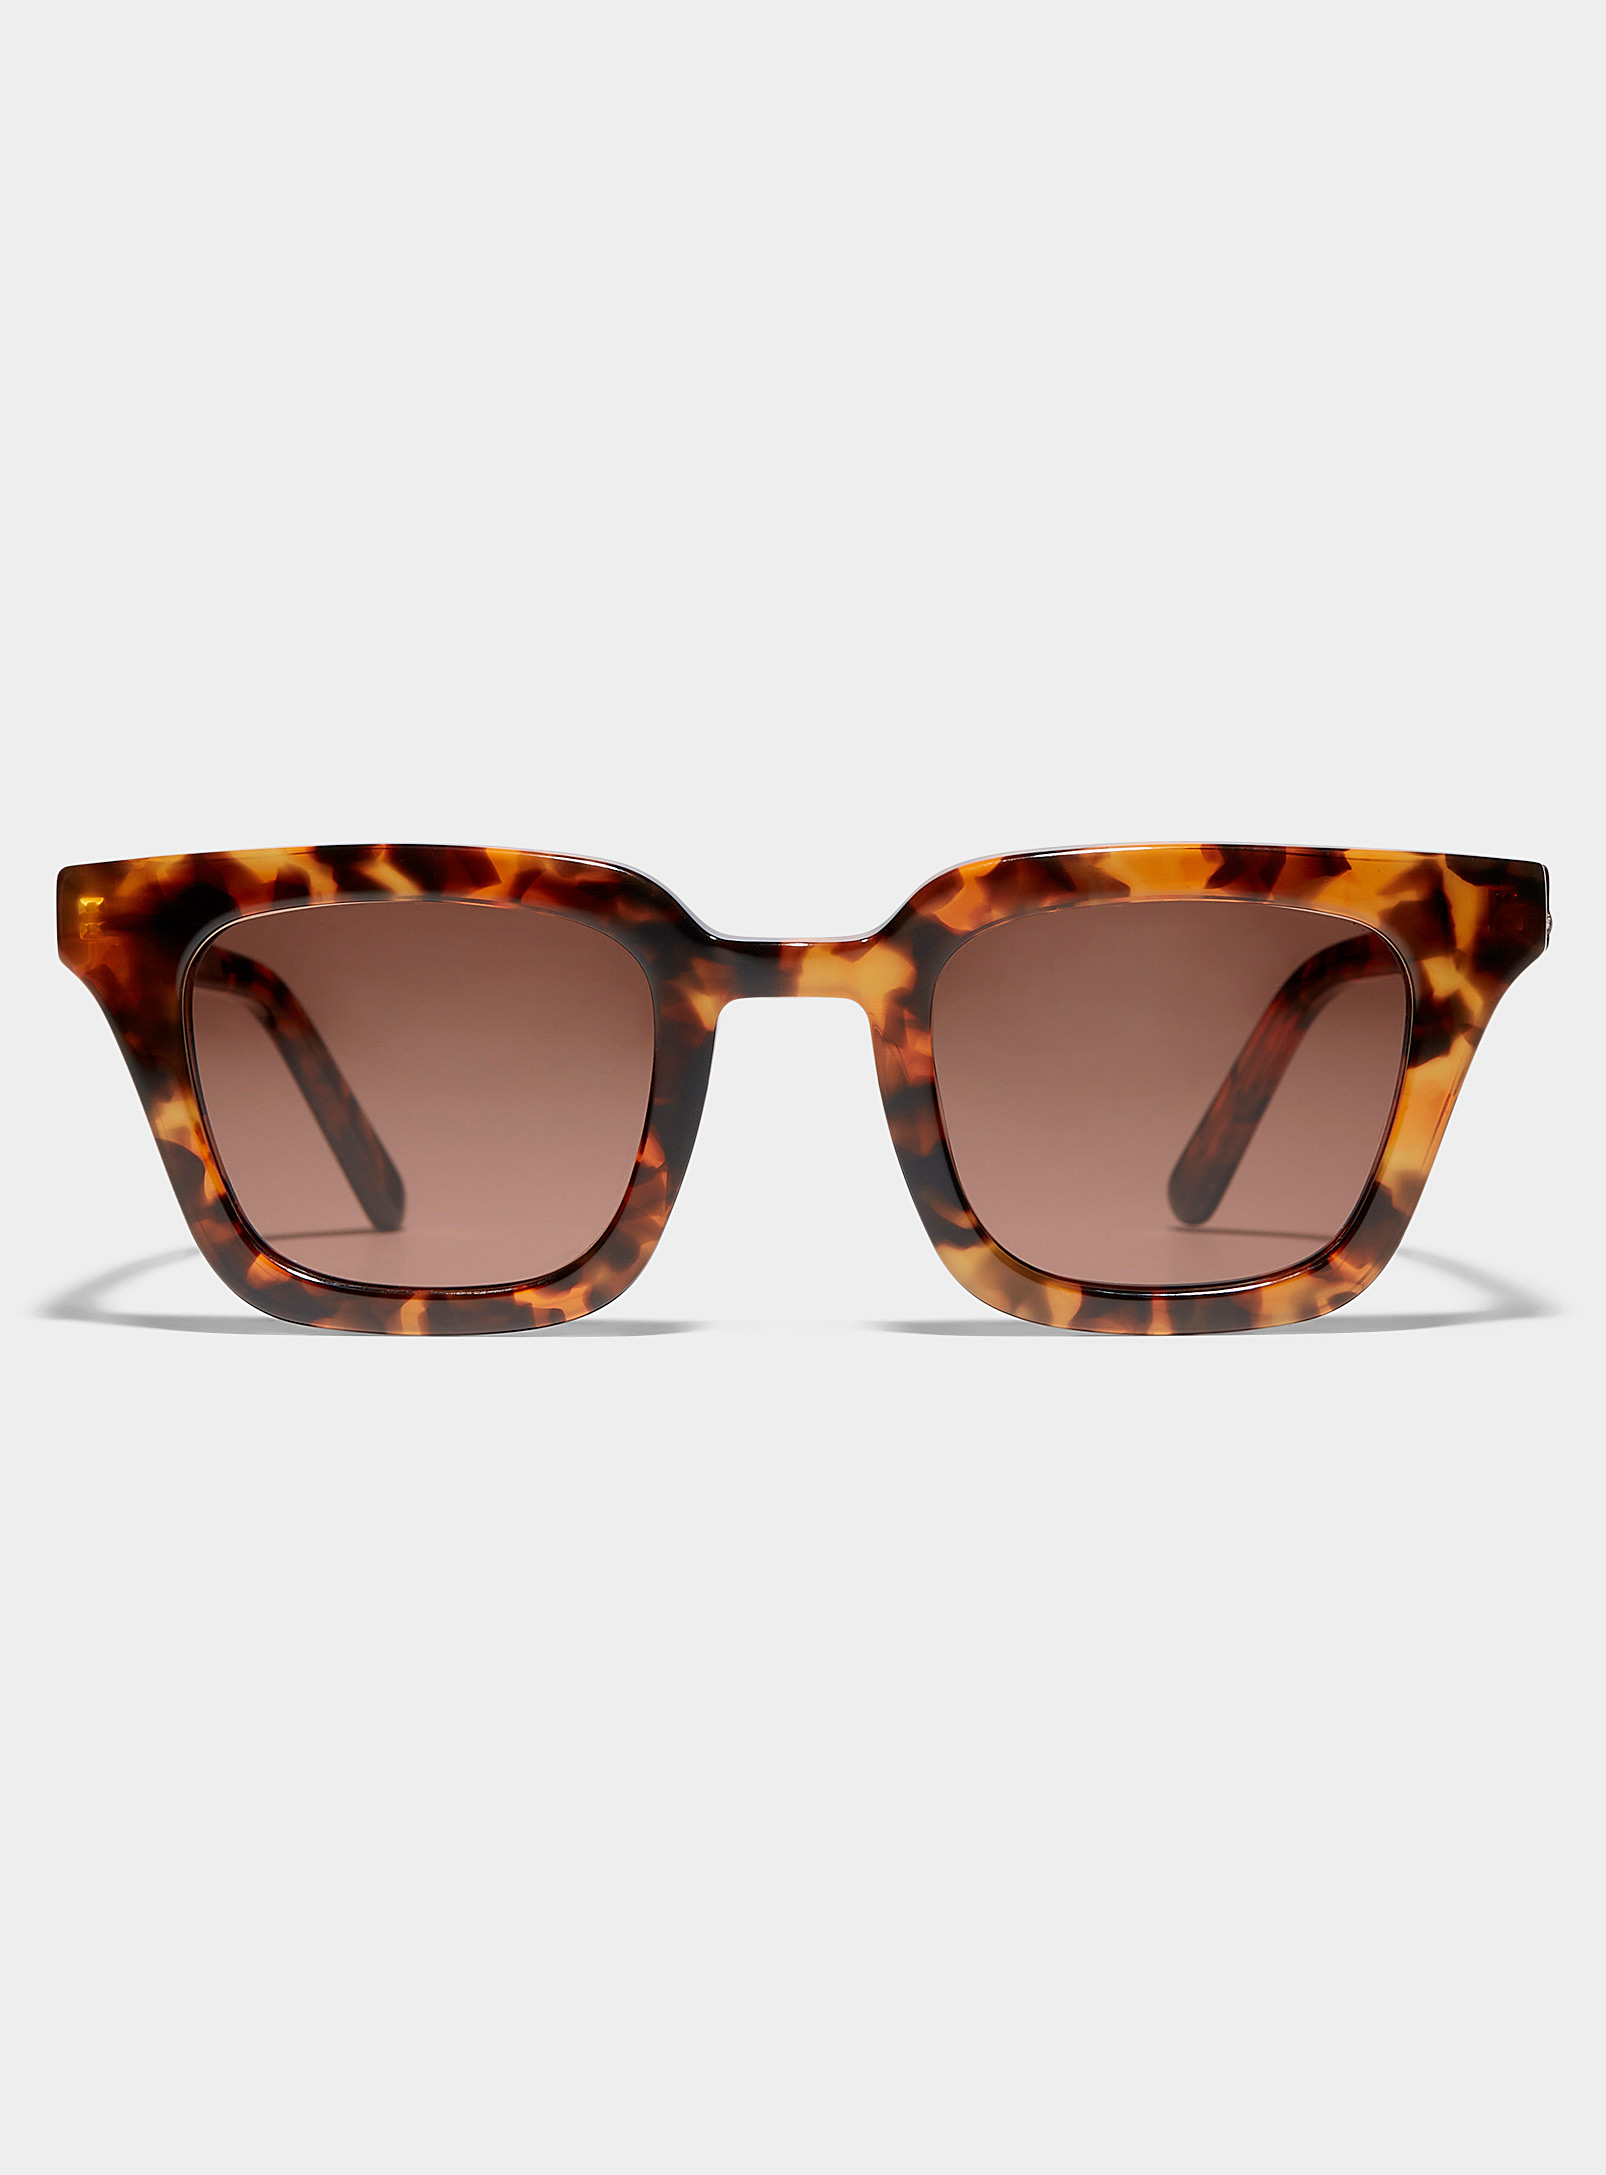 French Kiwis Ysee Square Tortoiseshell Sunglasses In Brown